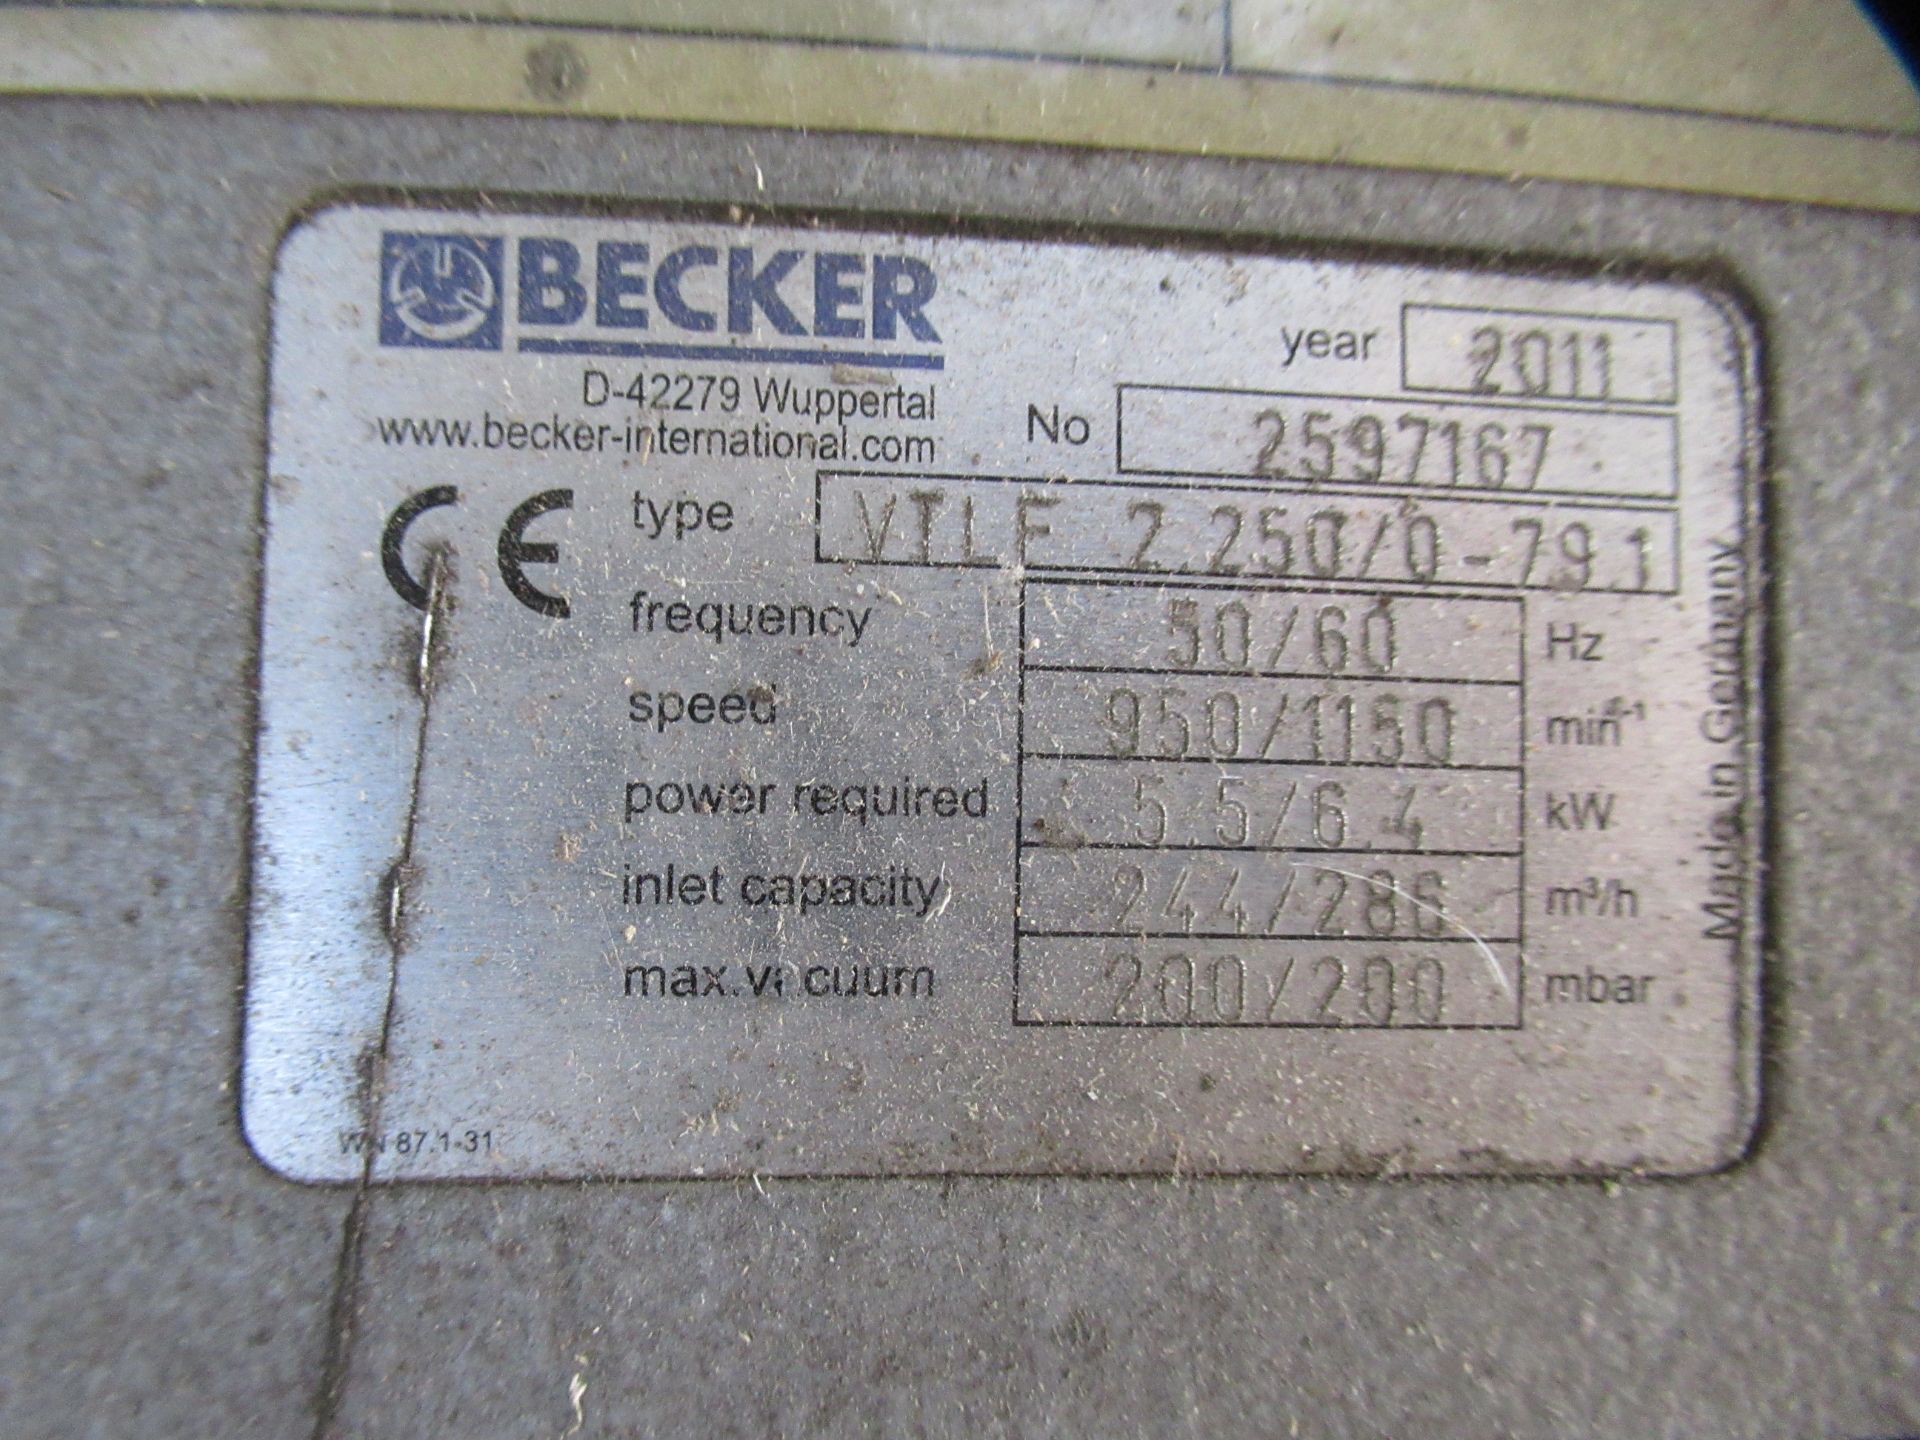 Becker VTLF-2.250/0-791 Vacuum Pump. - Image 5 of 5